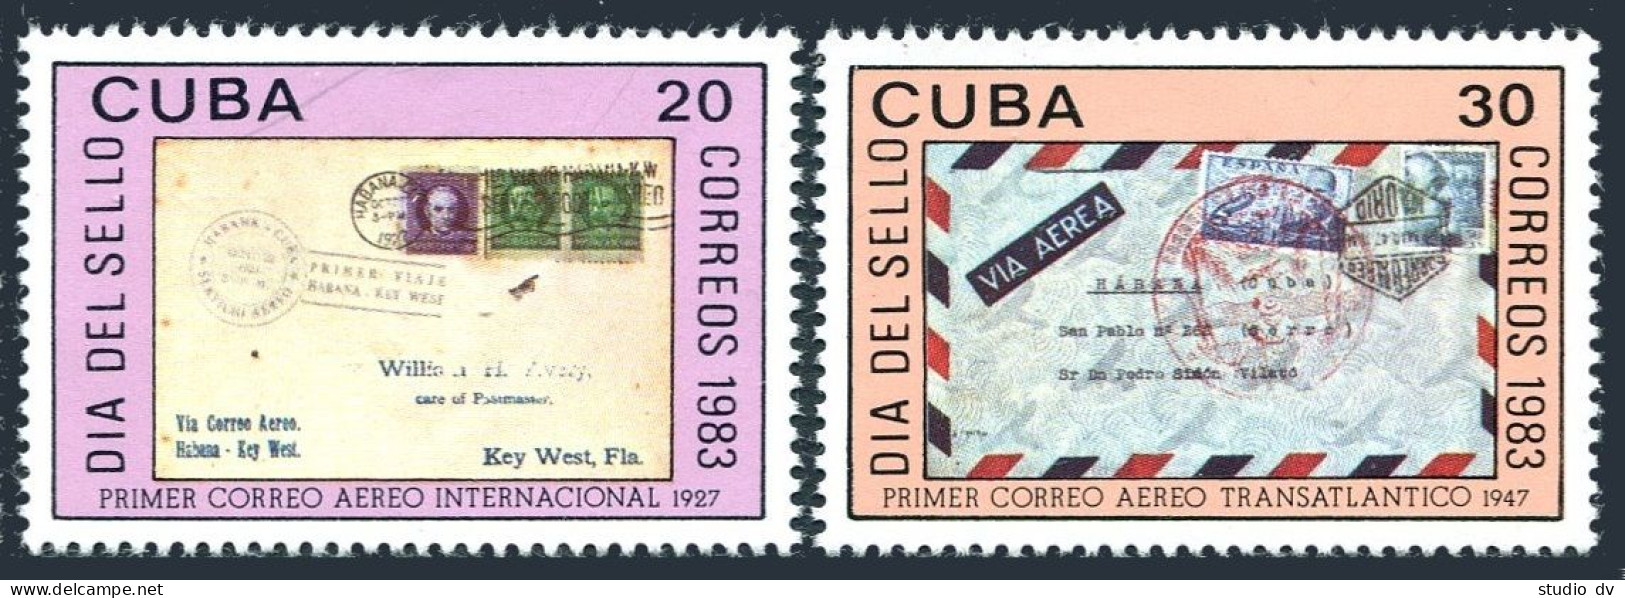 Cuba 2589-2590, MNH. Michel 2738-2739. Stamp Day 1983. Covers. - Ongebruikt